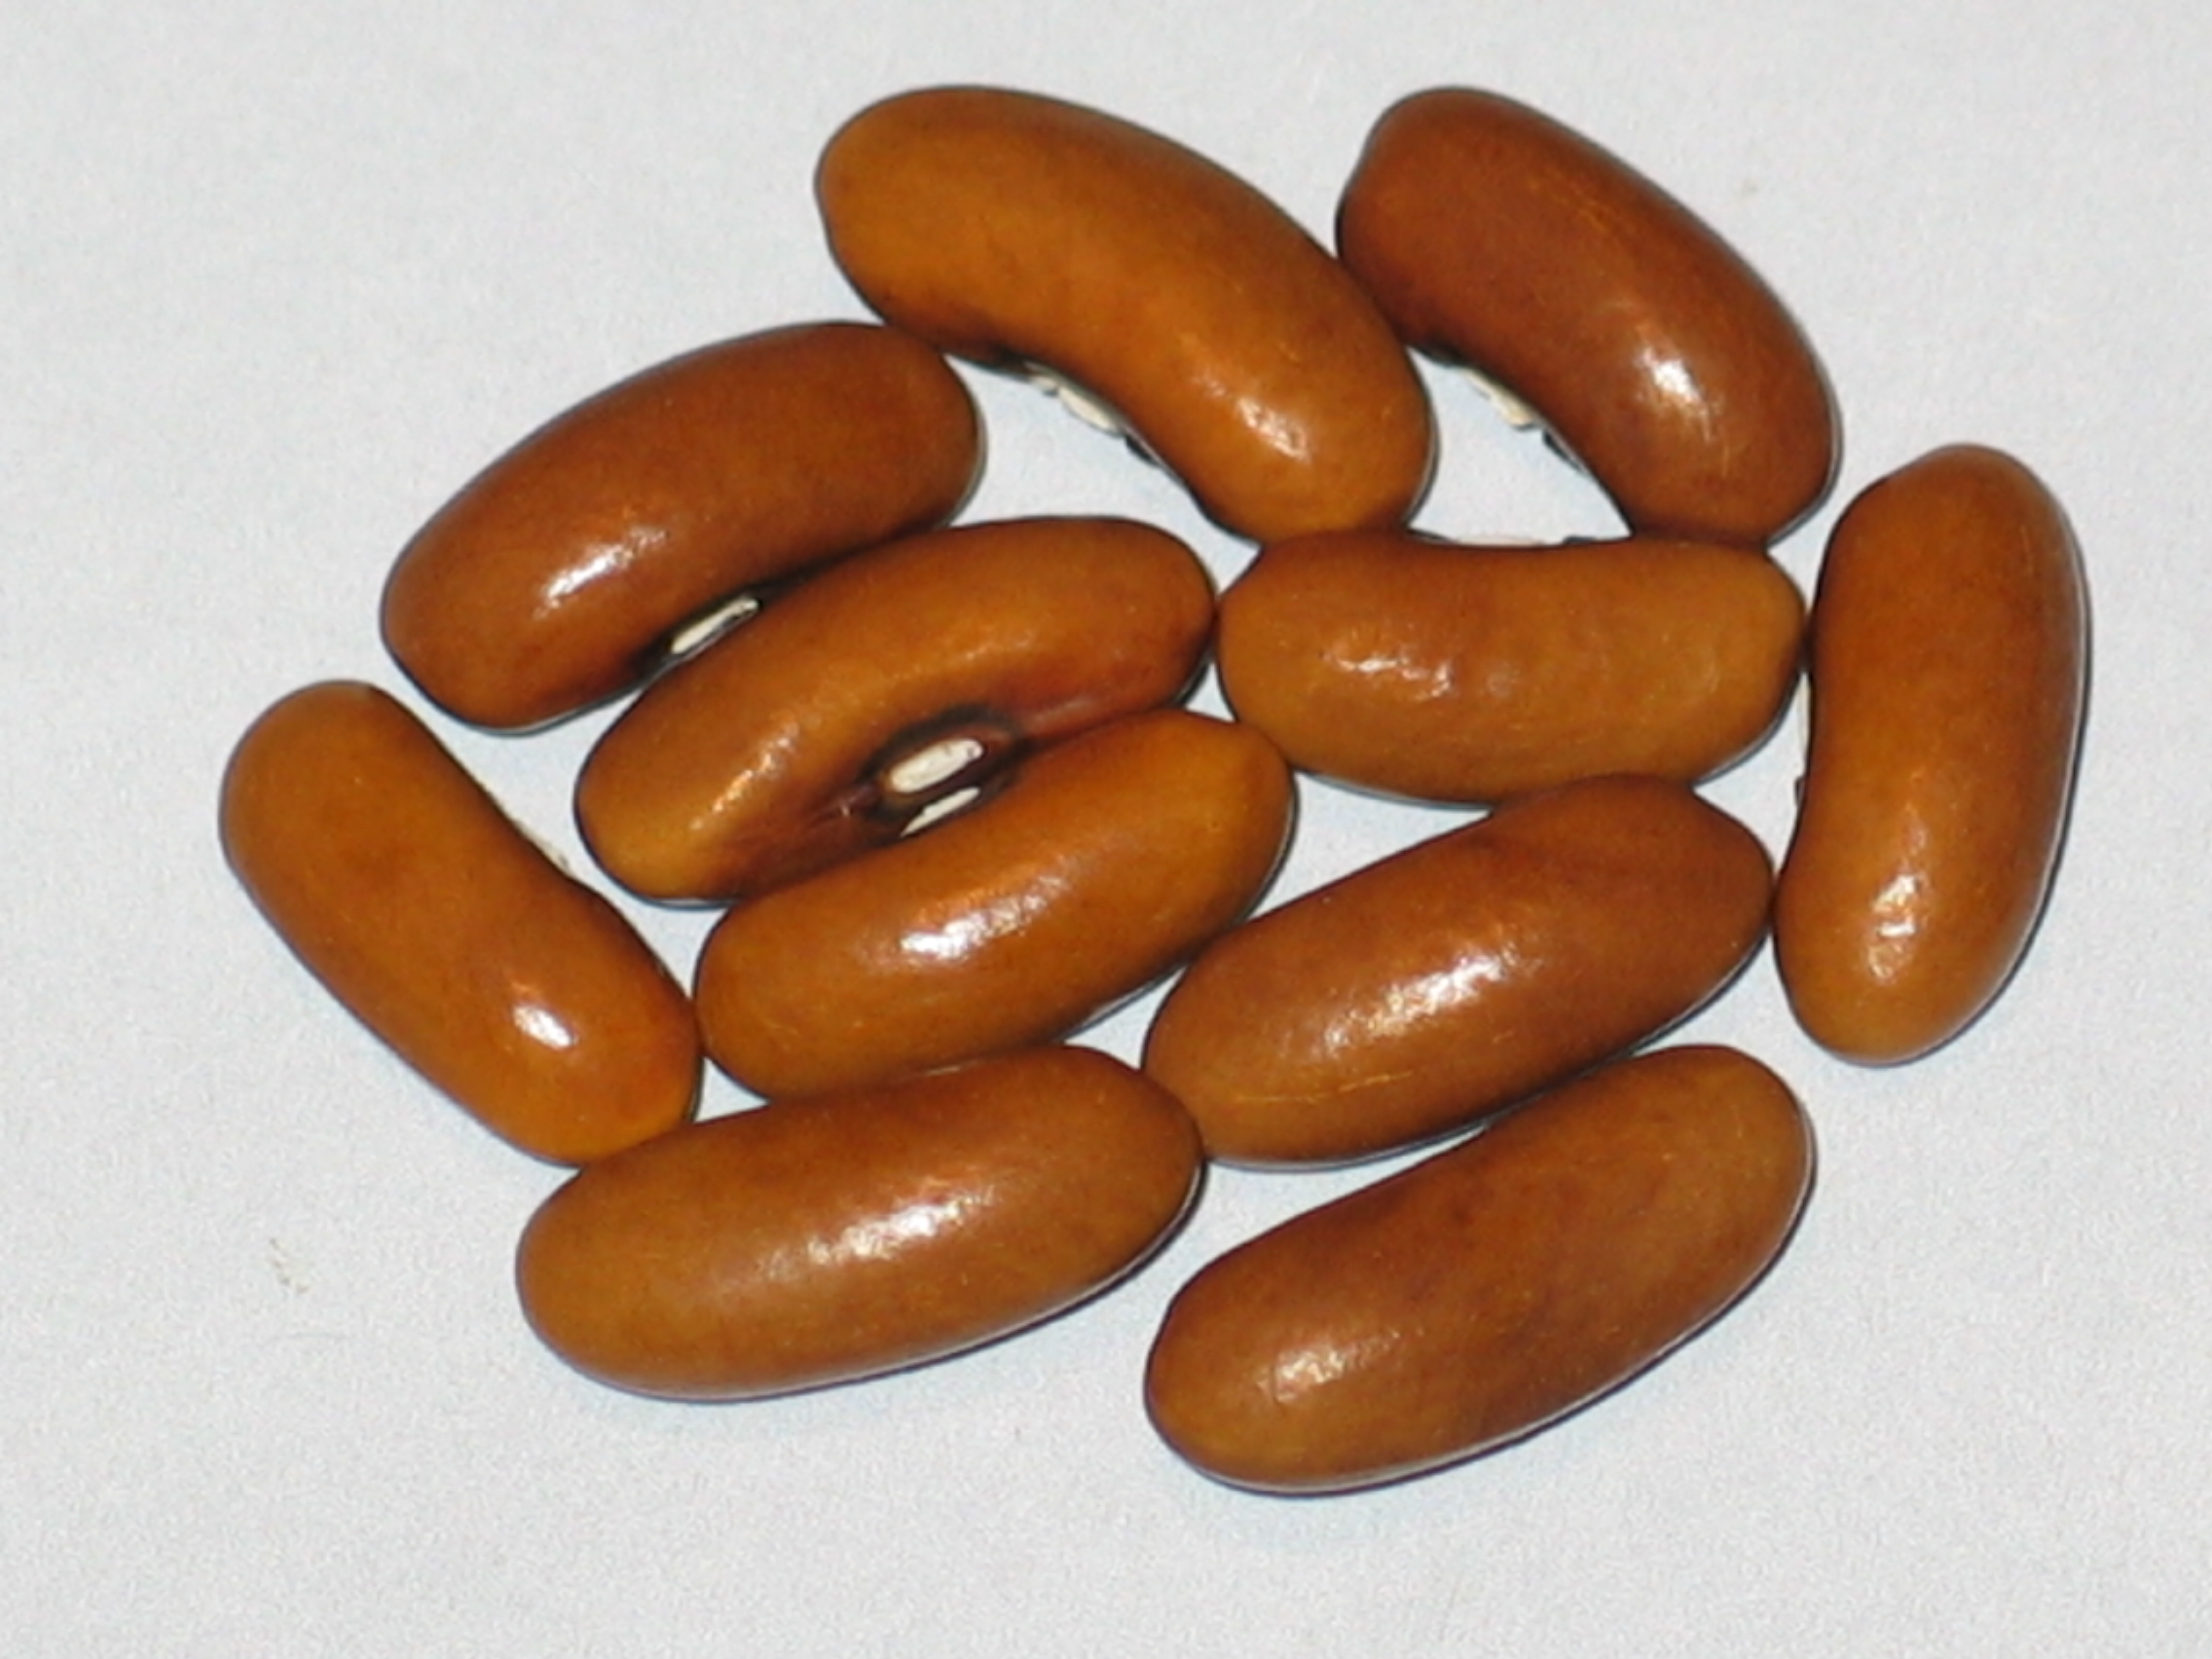 image of Kay Snap beans